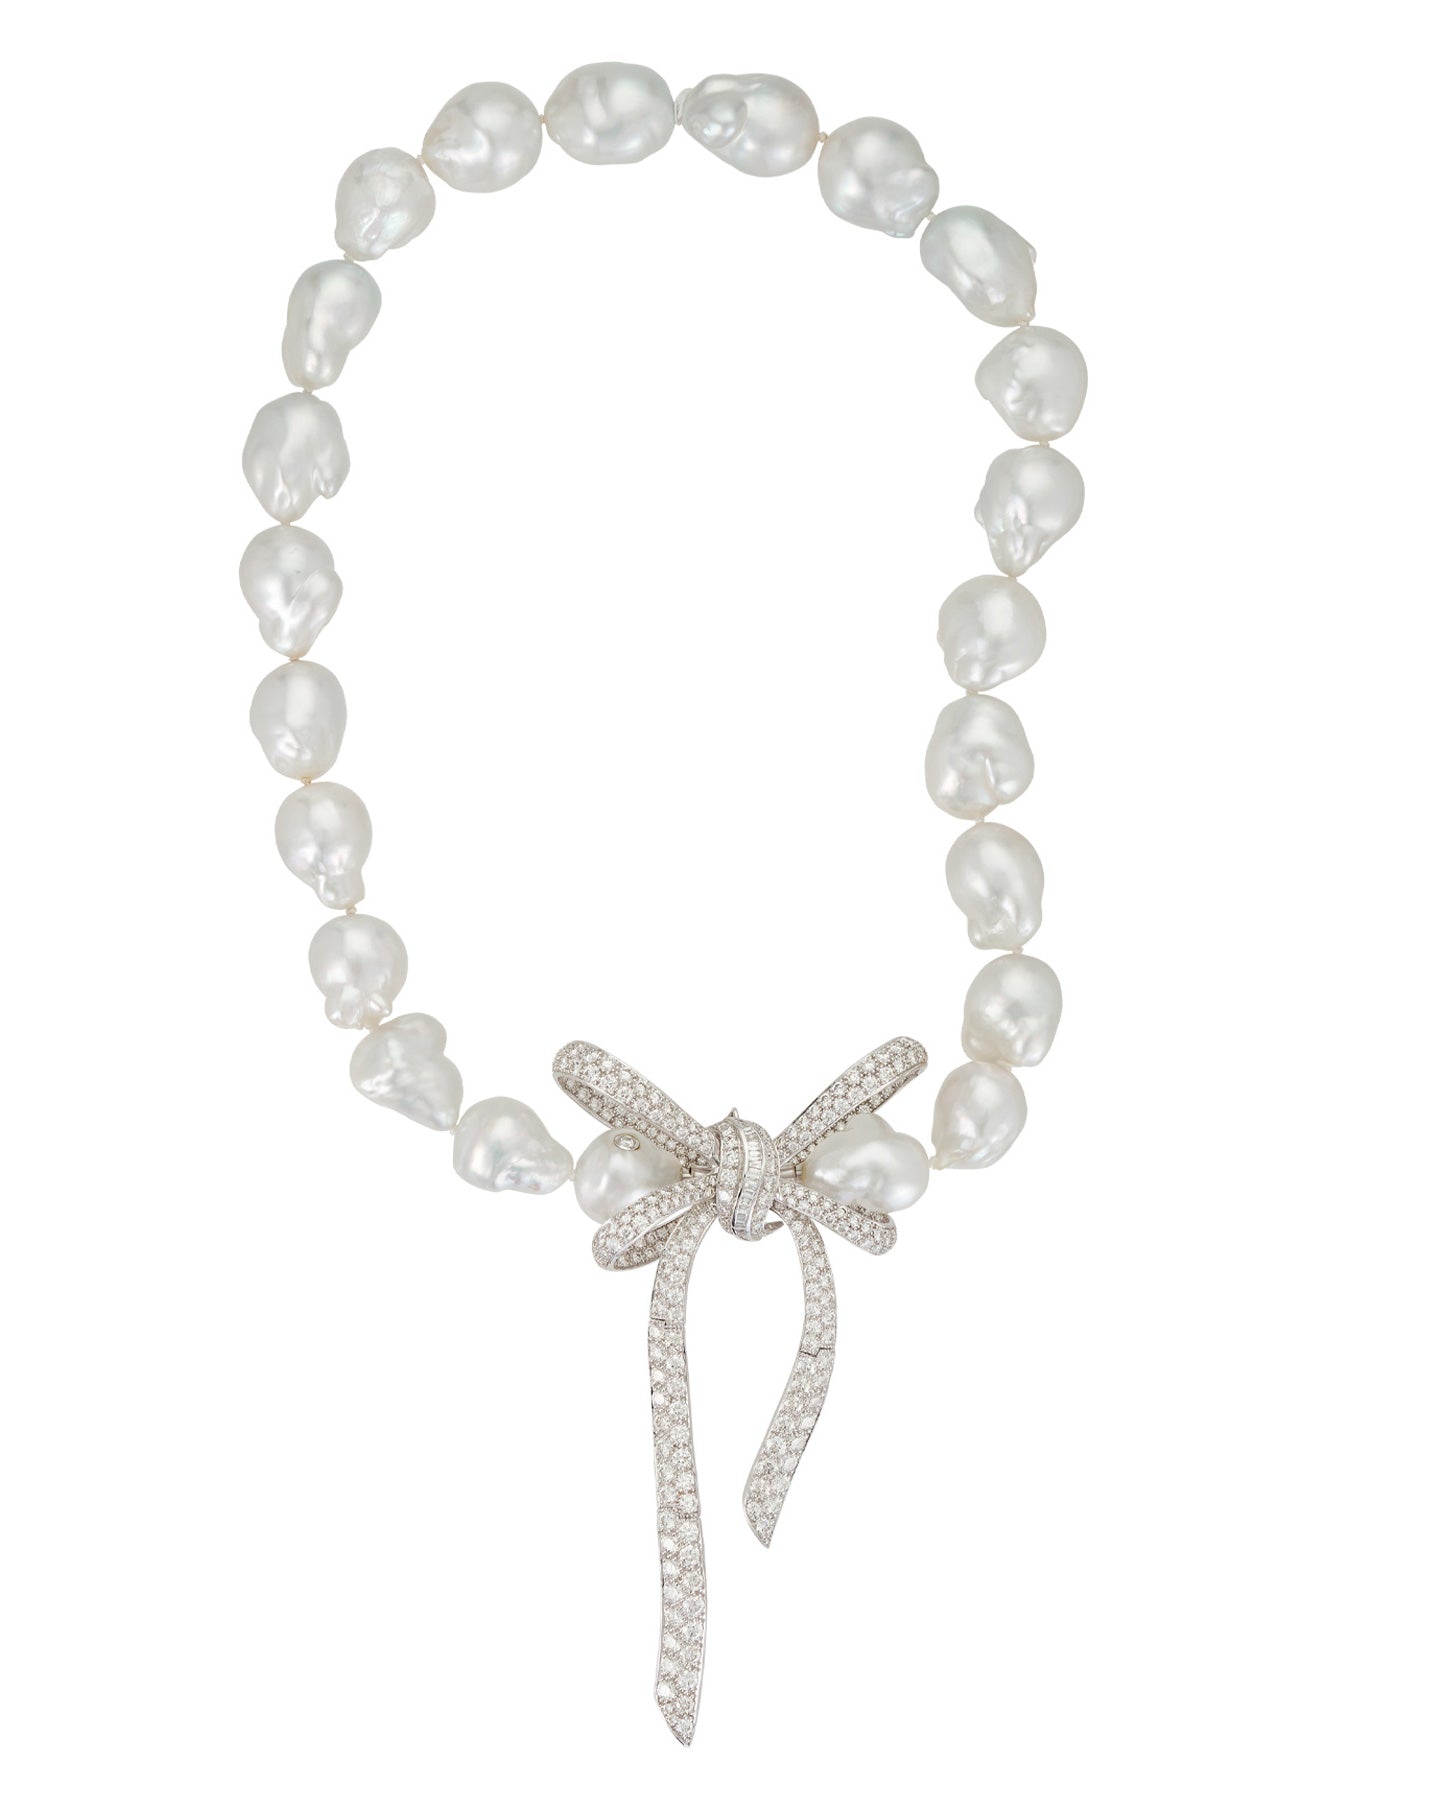 Australian South Sea Pearl Necklace and Diamond Bow Pendant